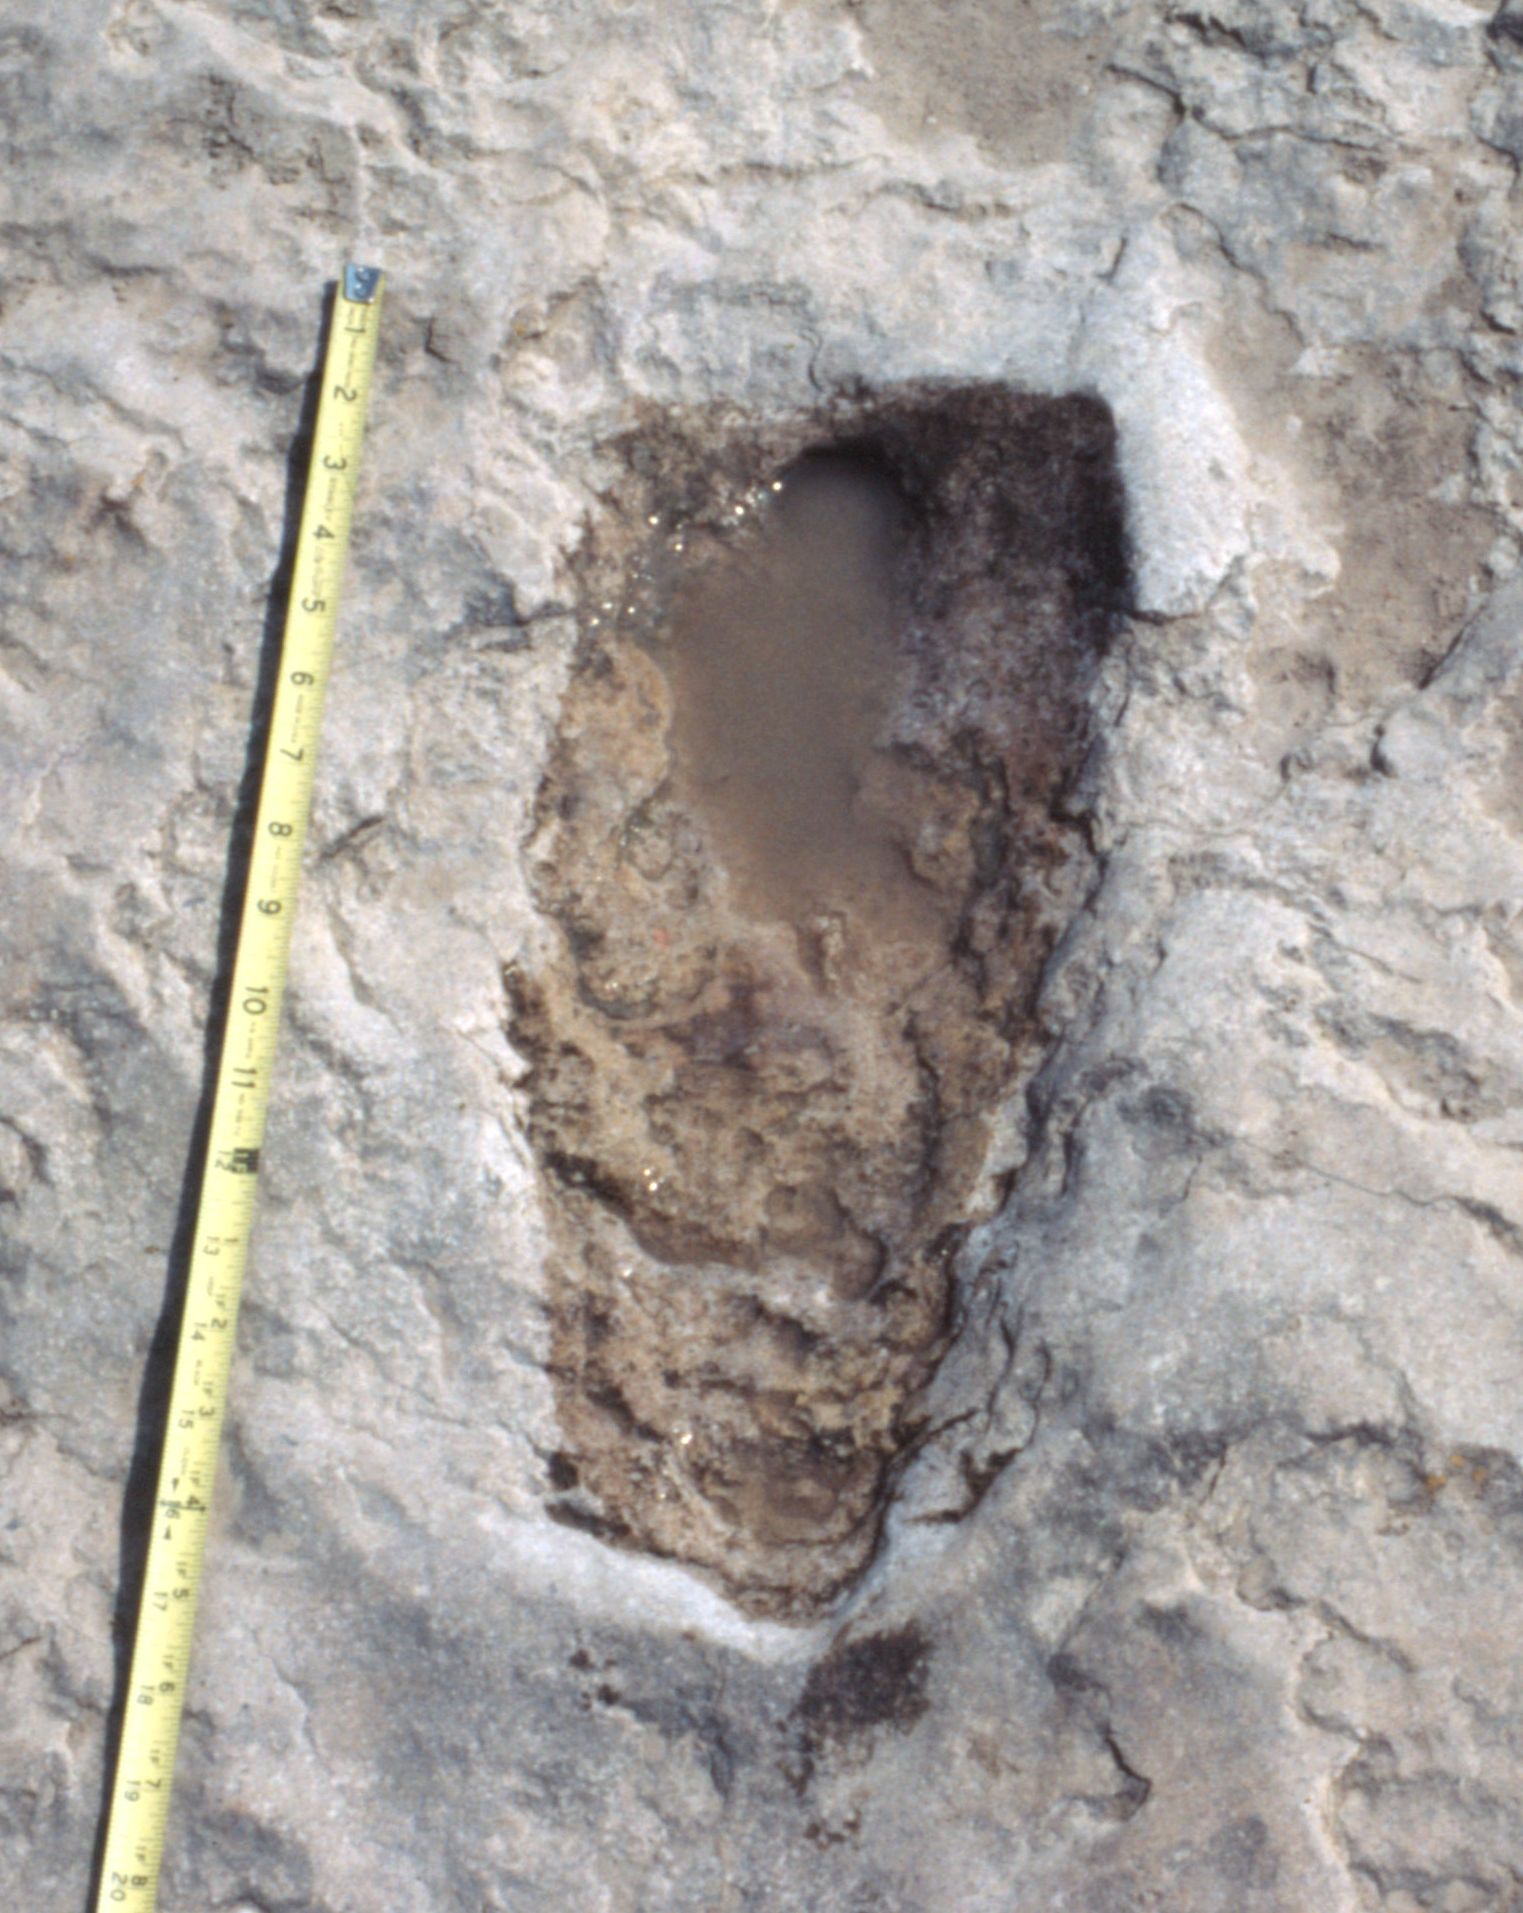 'Alleged human footprint at State Park Shelf 